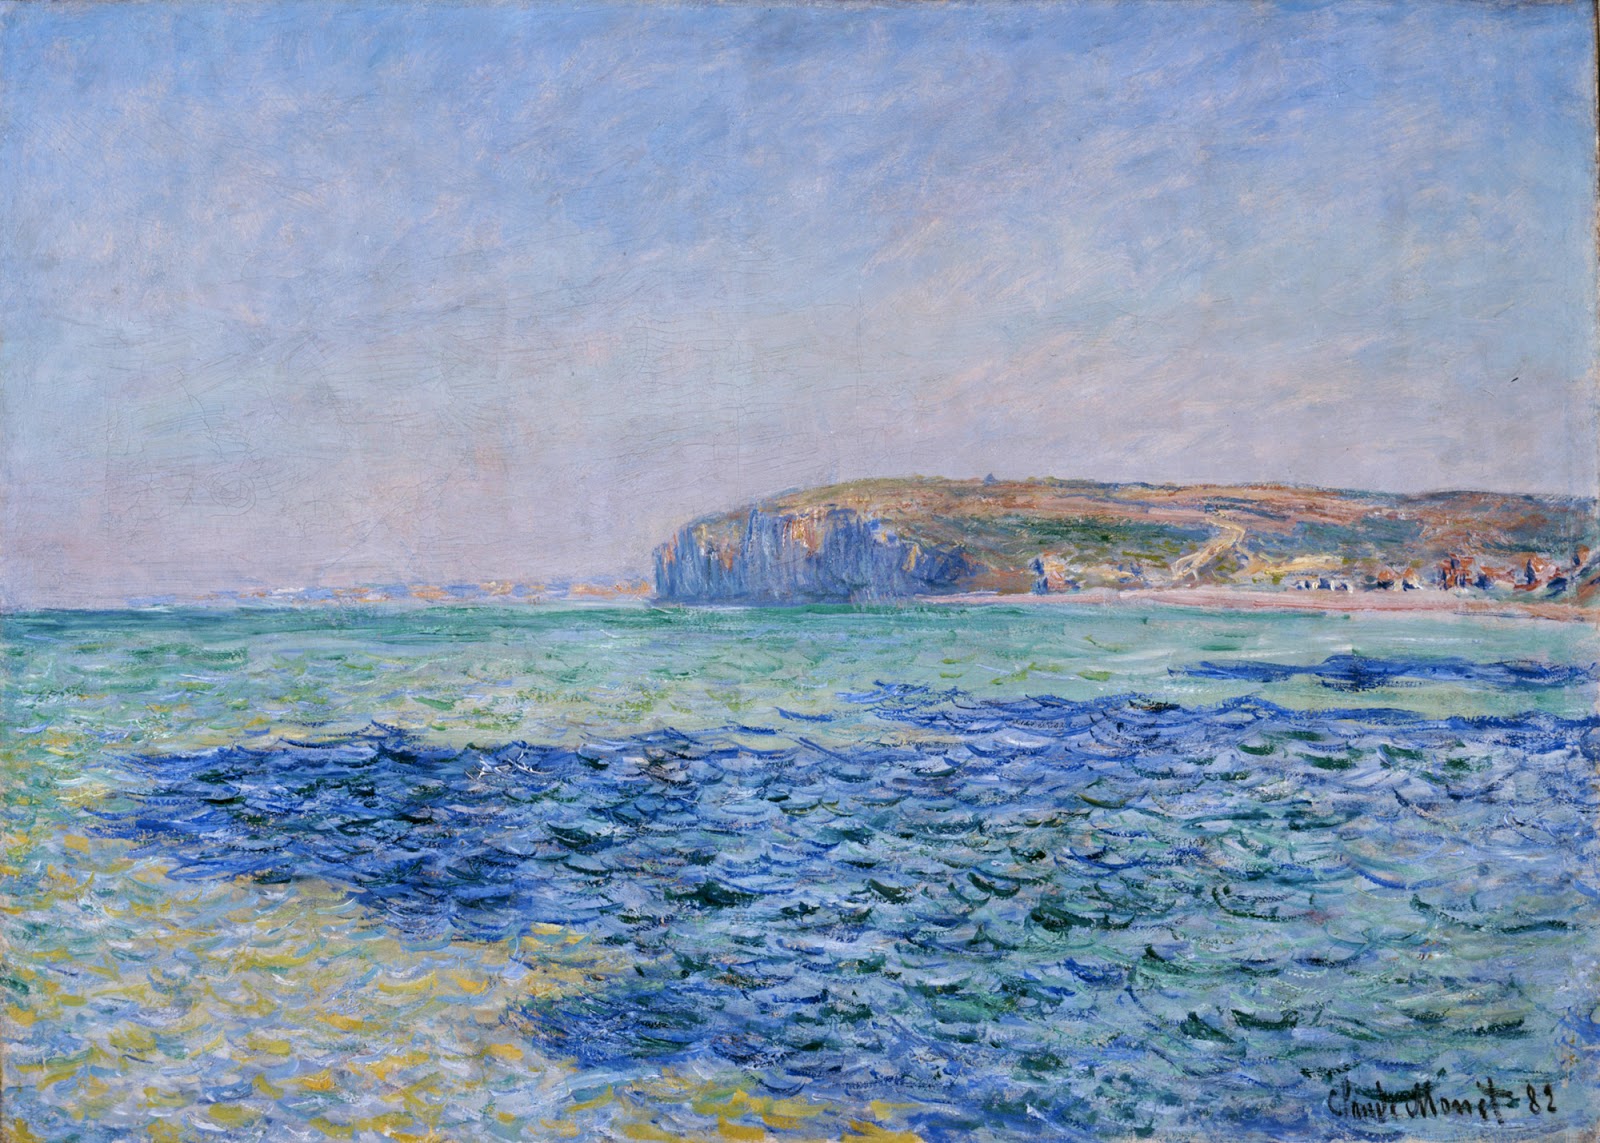 Claude+Monet-1840-1926 (692).jpg